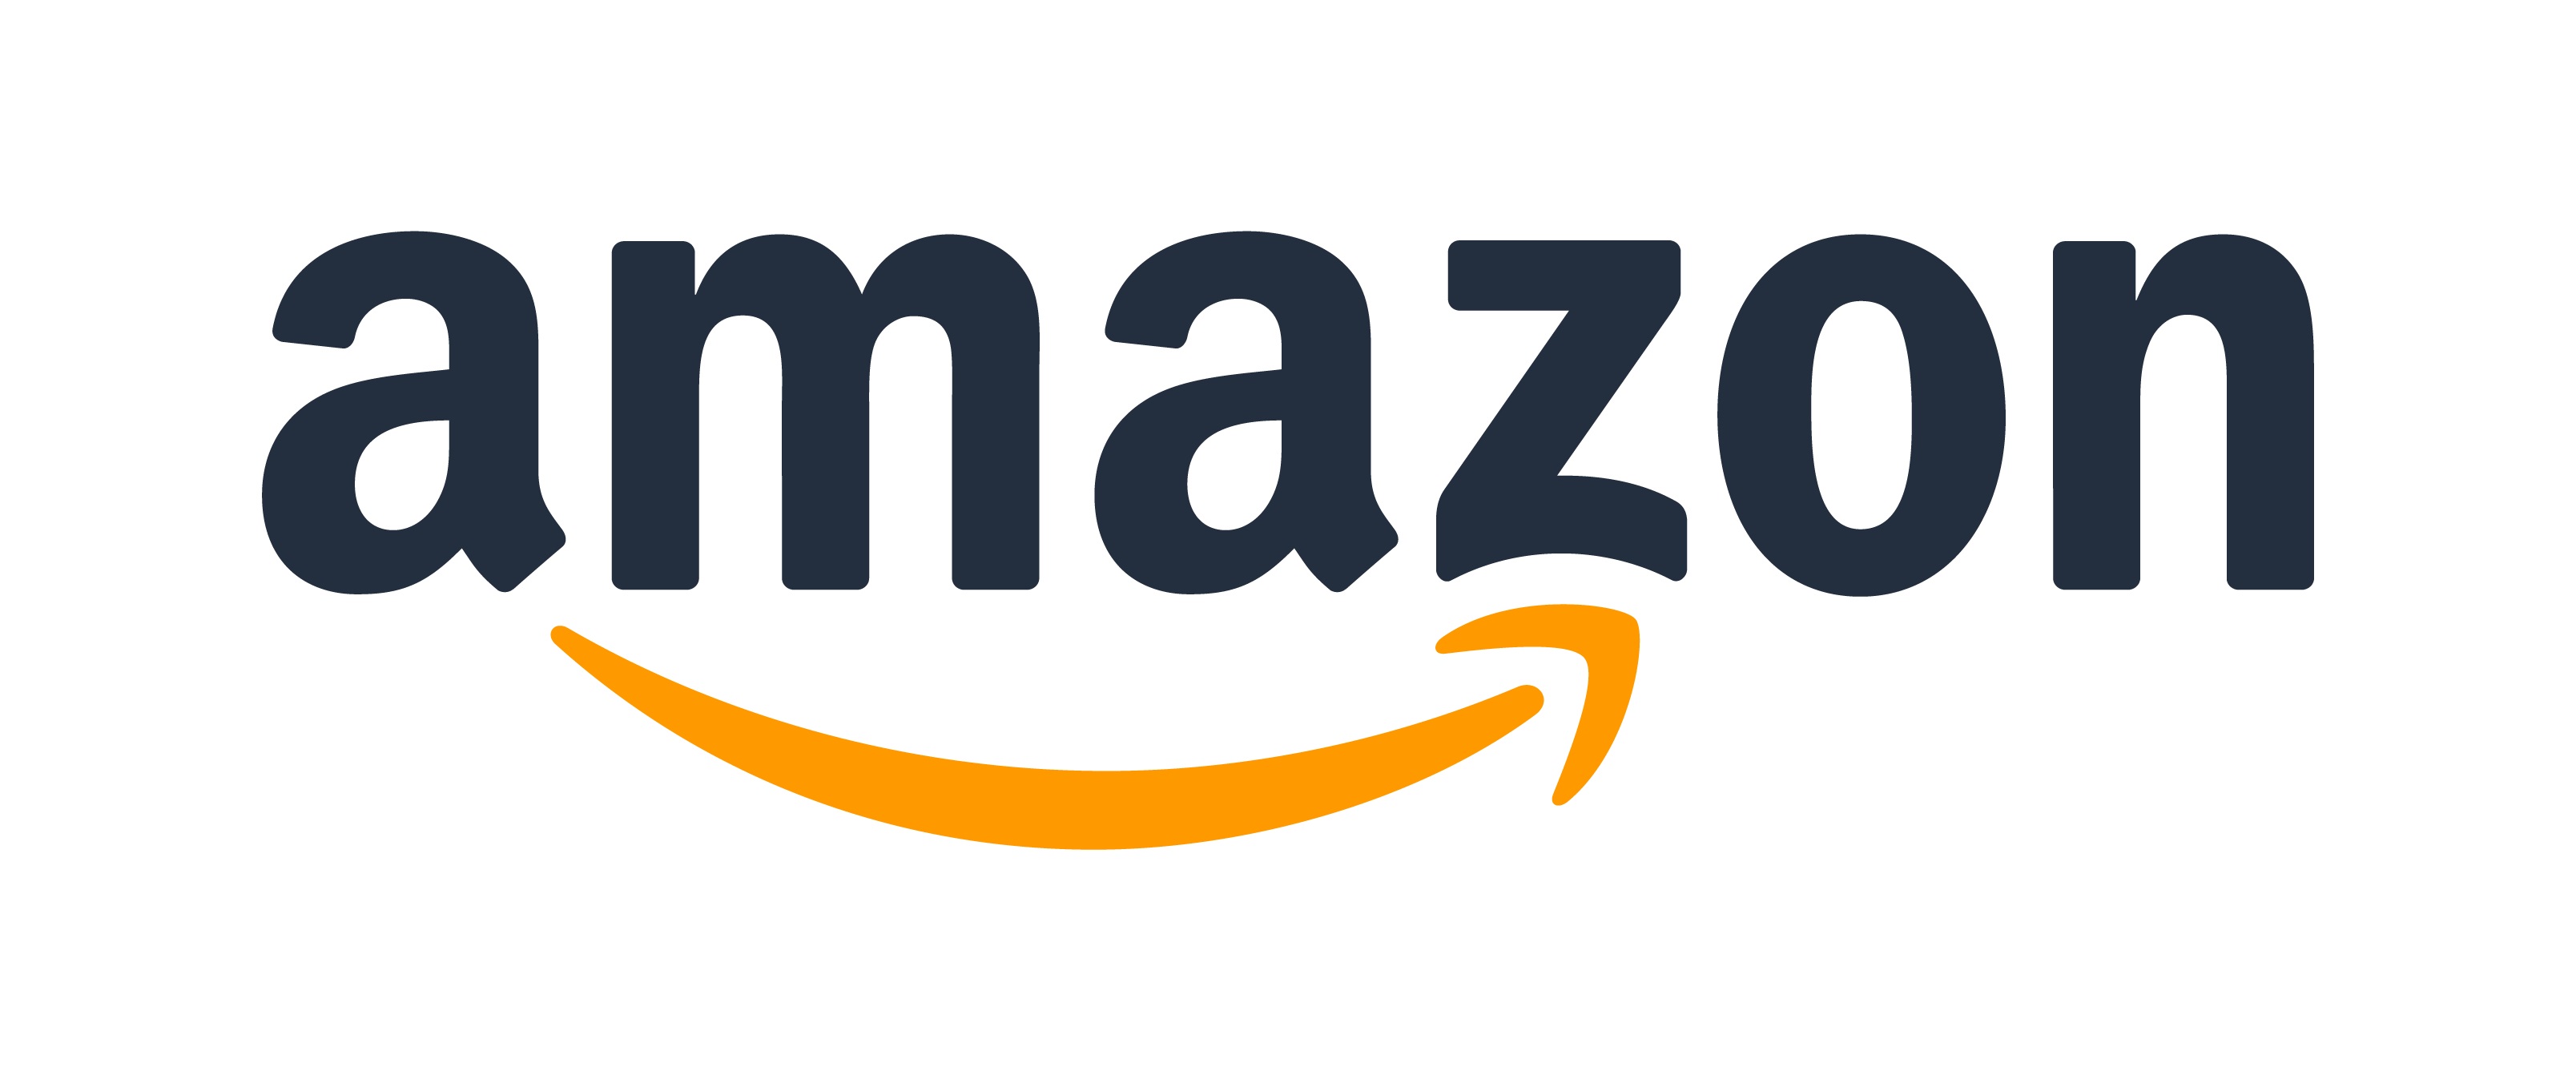 Article - Author name Amazon India